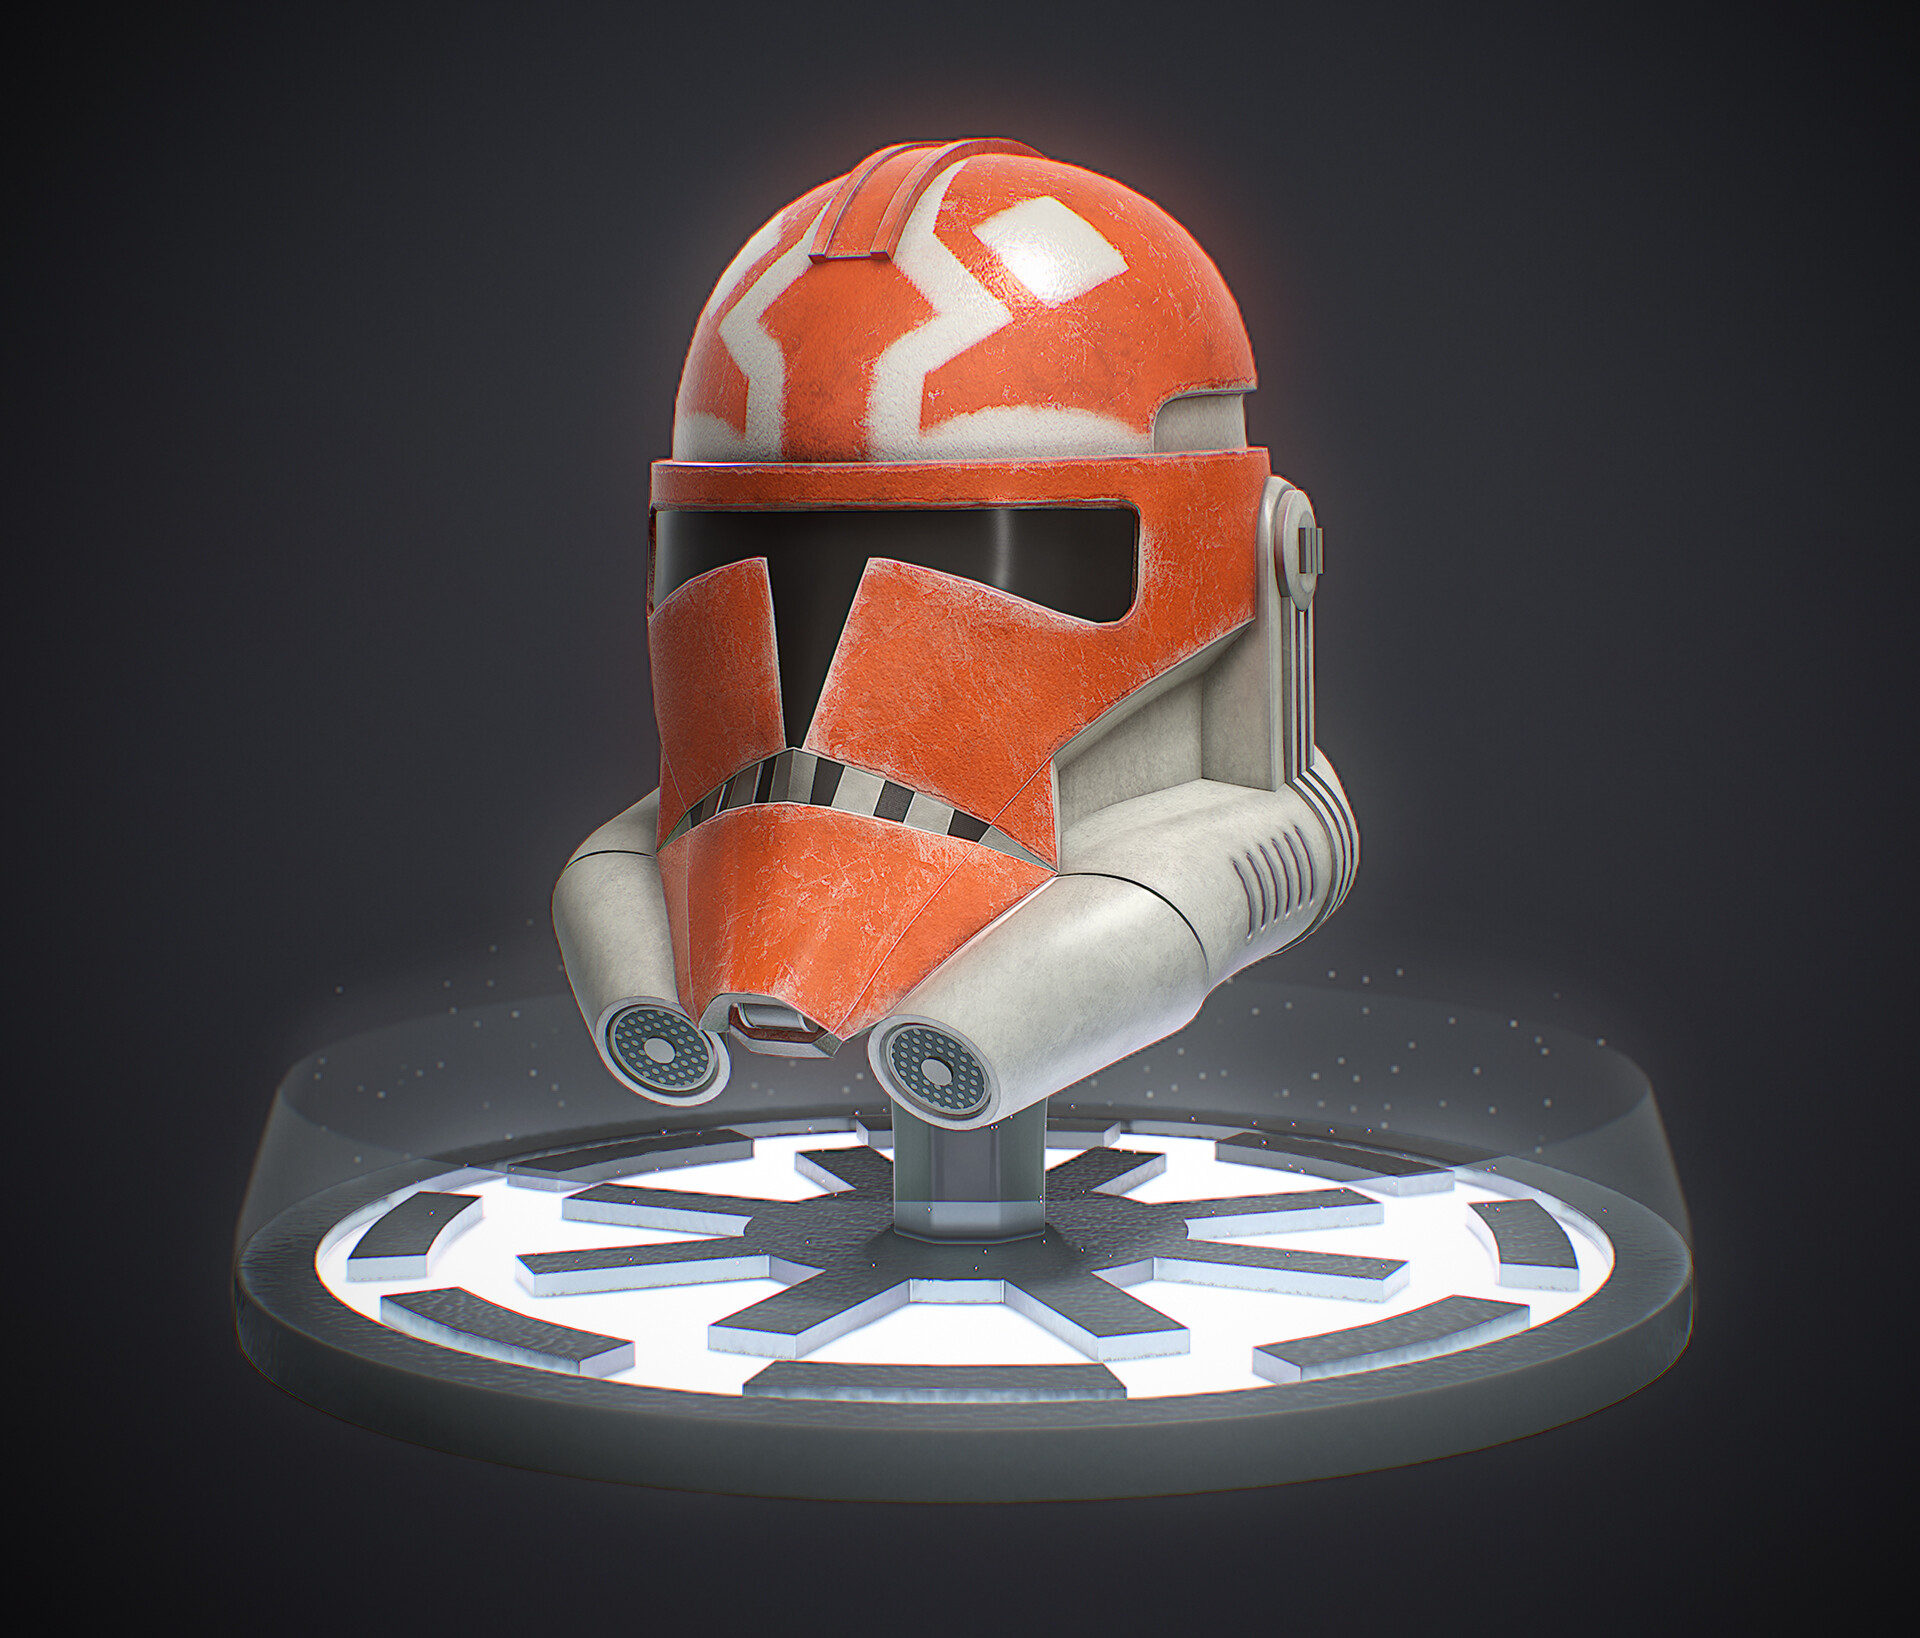 Star Wars The Clone Wars Ahsoka Tano and 332nd Company Helmet Ornament 